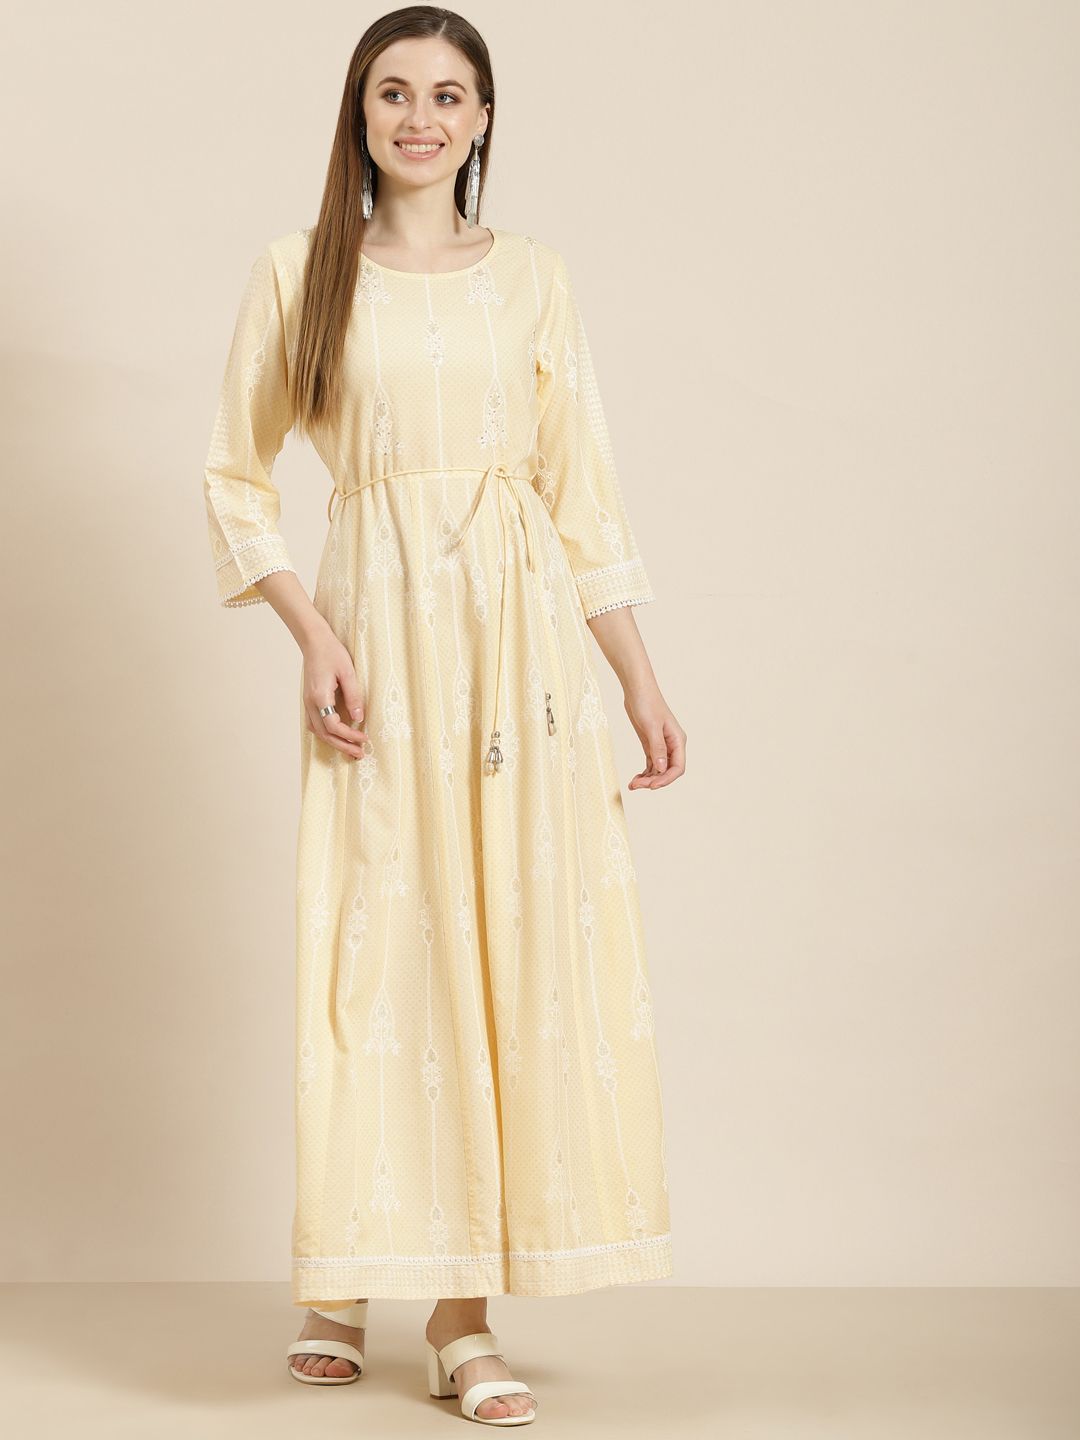 Juniper Yellow & White Ethnic Motifs Printed Liva Anarkali Dress Price in India